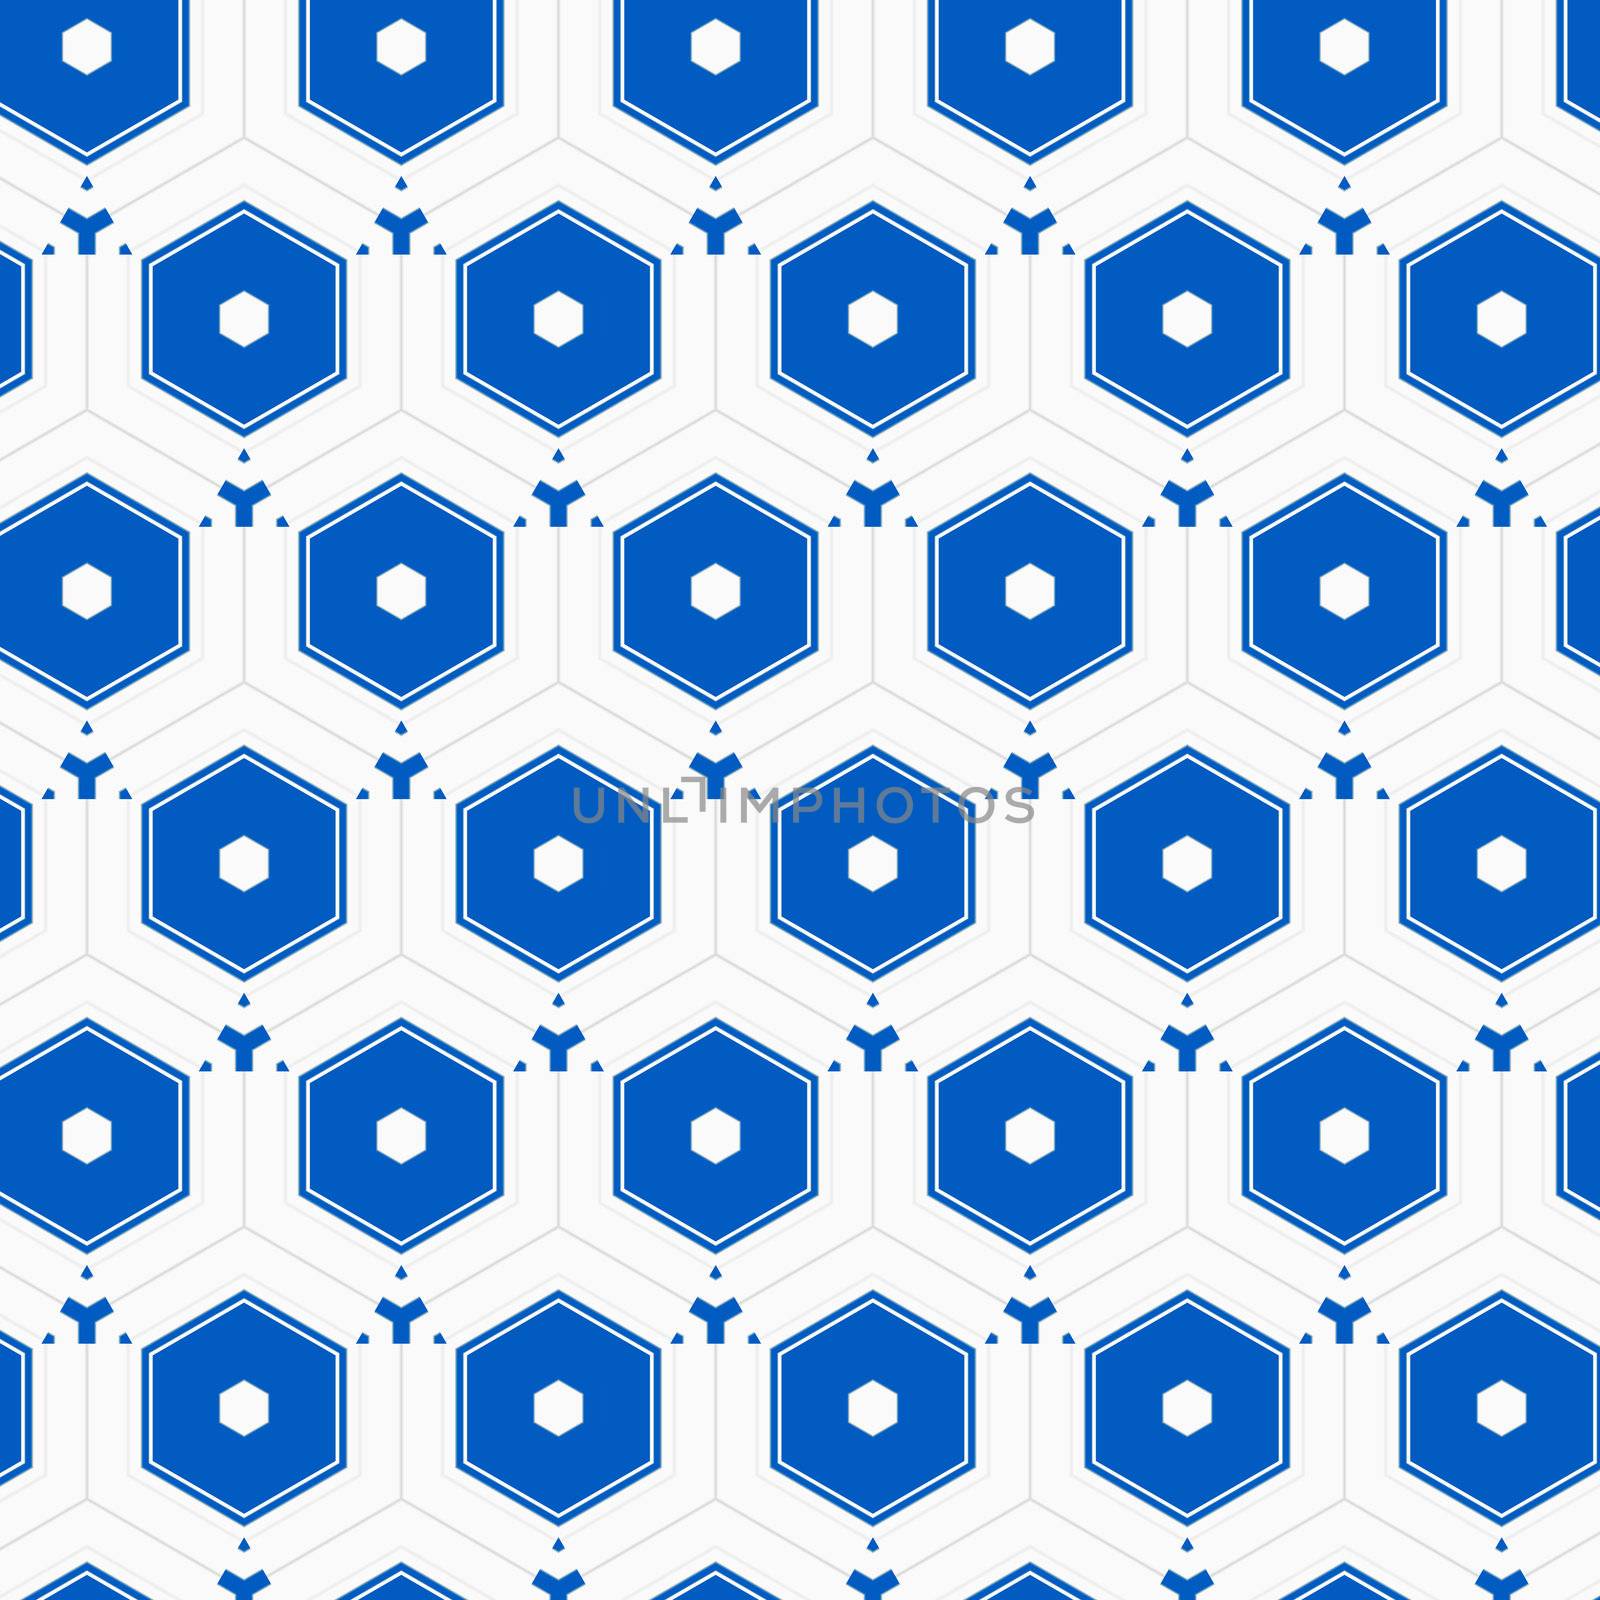 Hexagonal Tile Pattern by patballard